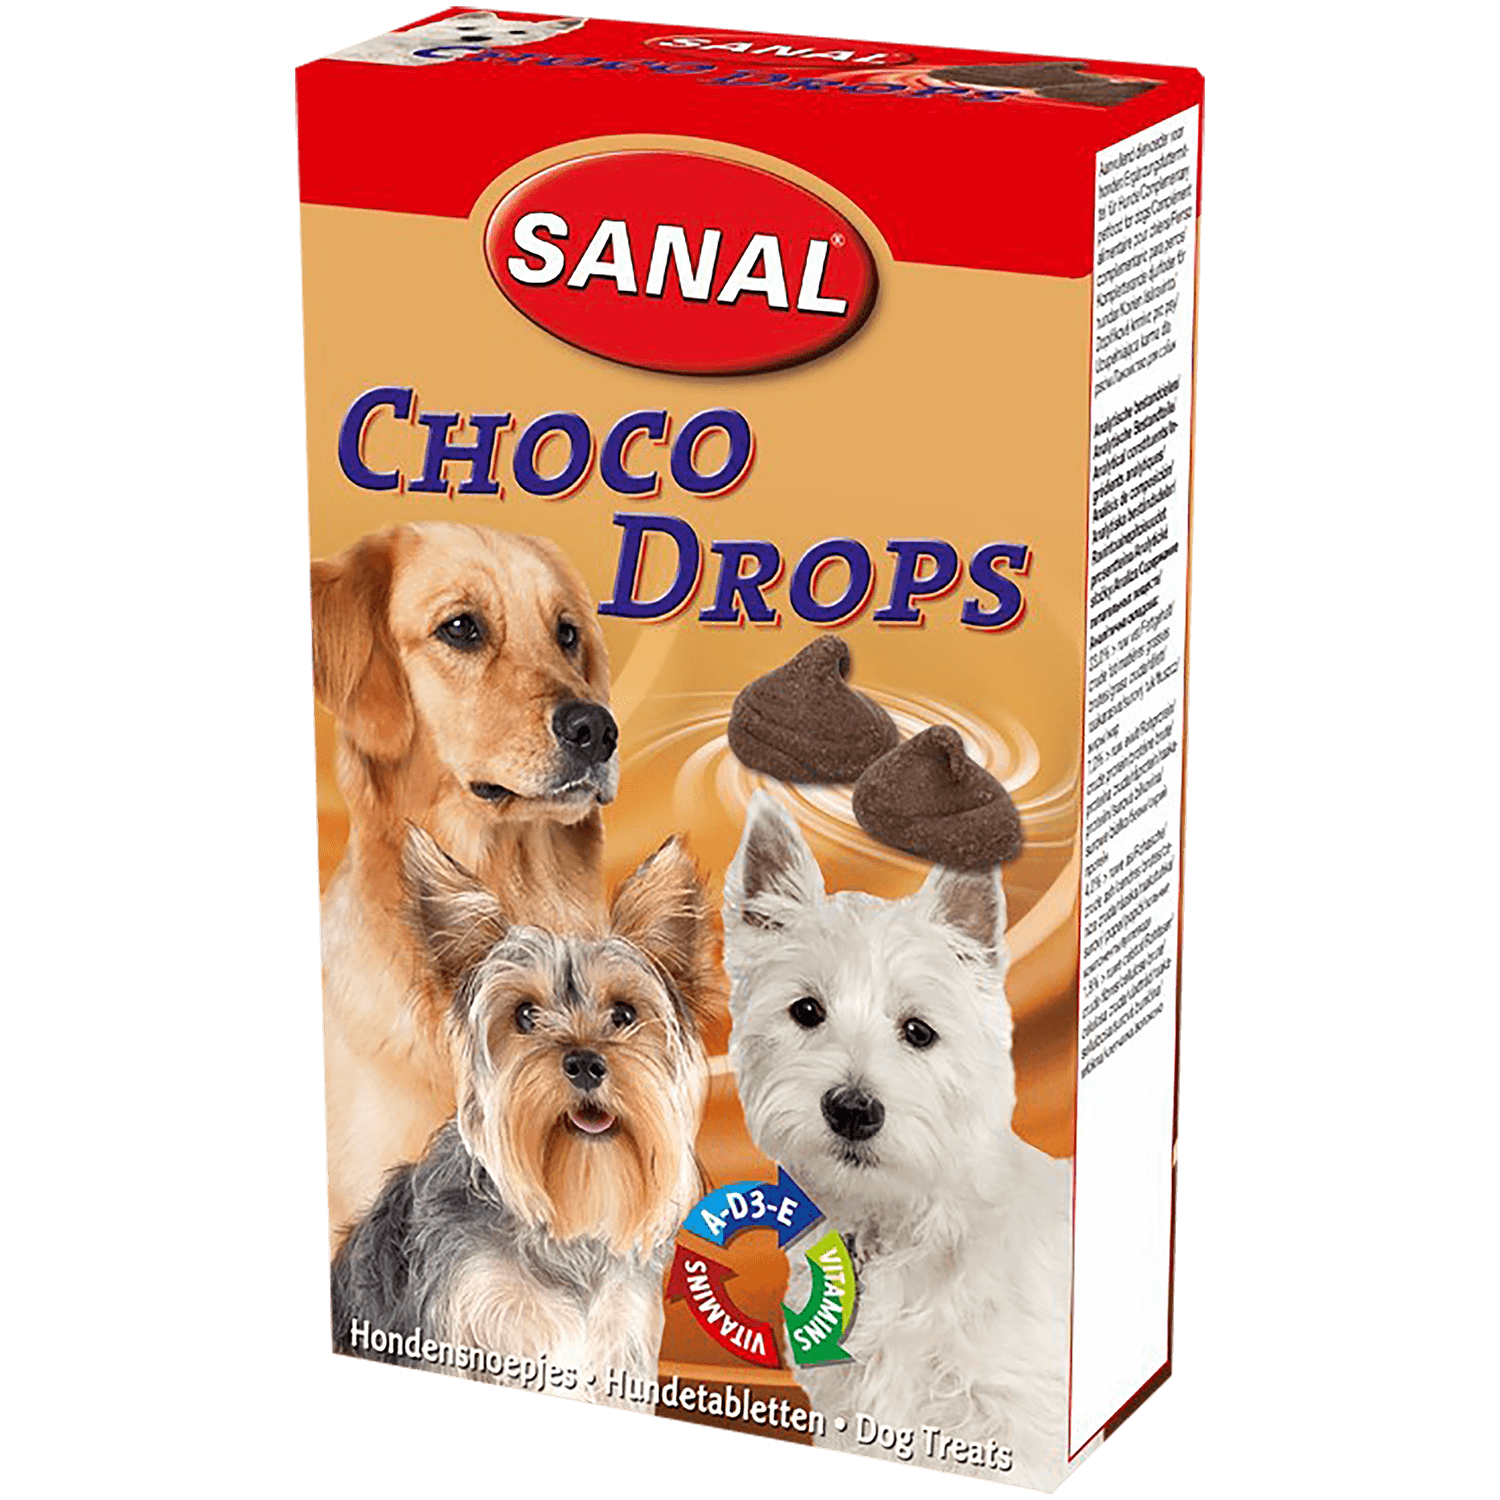 SANAL Choco Drops Шоколадные дропсы для собак